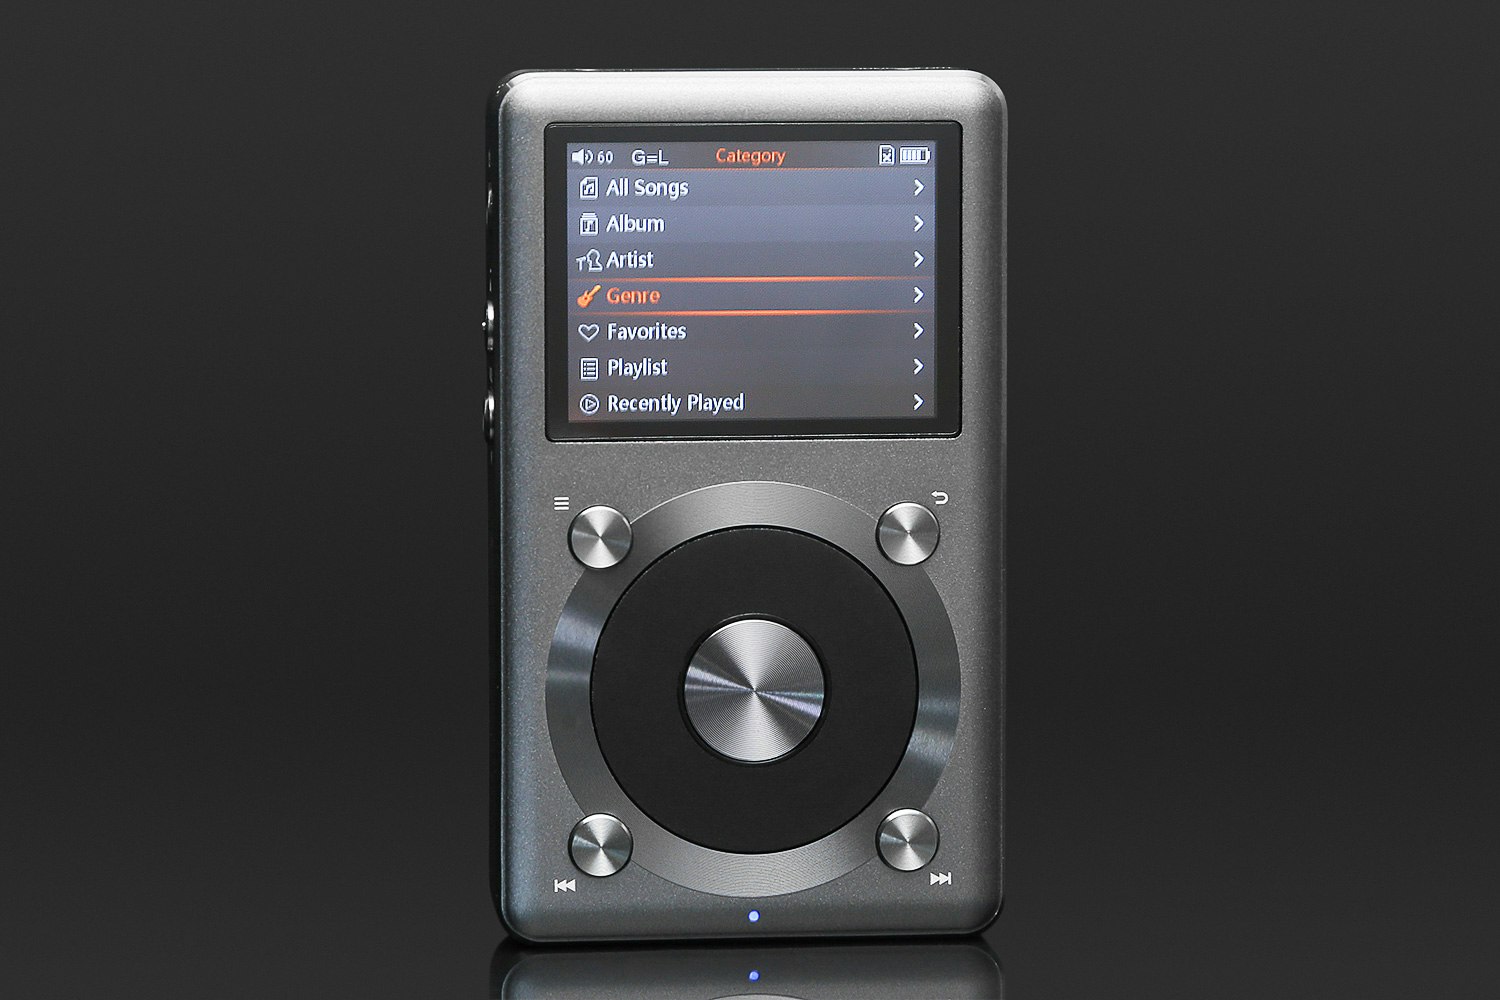 Fiio X3 2nd-Generation Player | Audiophile | DAPs | Portable DAPs 